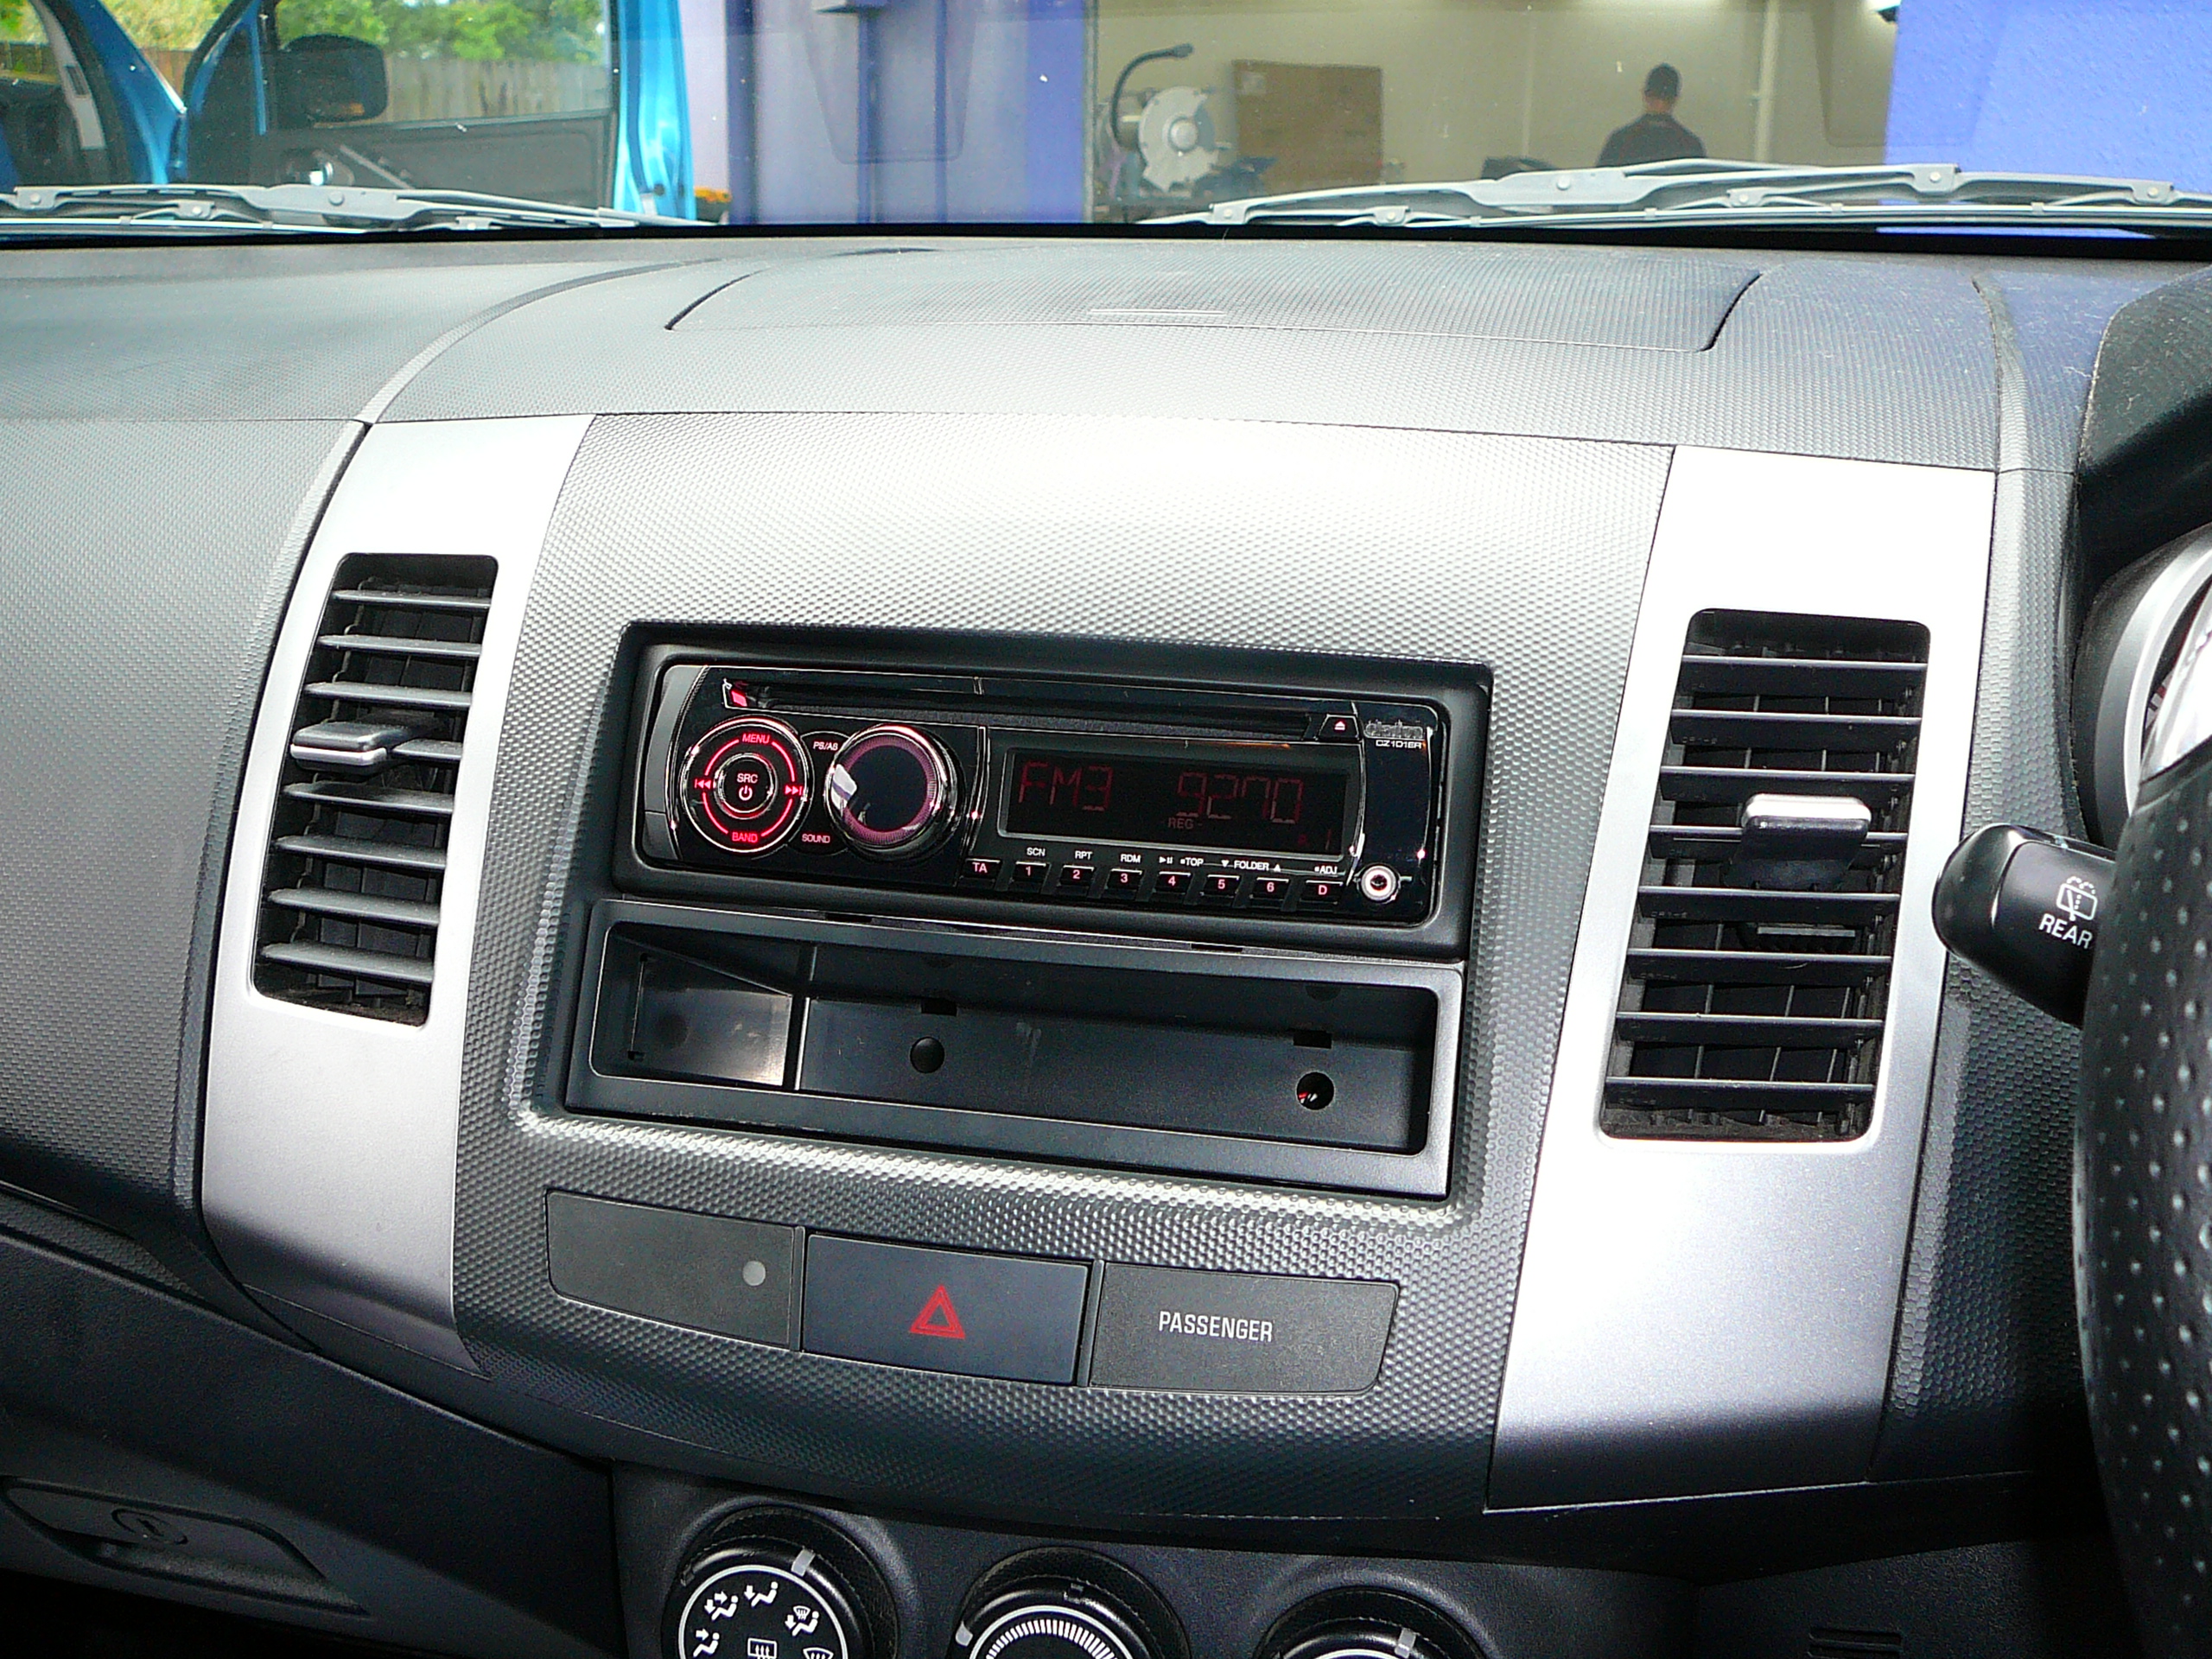 Mitsubishi Outlander 2009, CD Radio dash kit and steering wheel controls